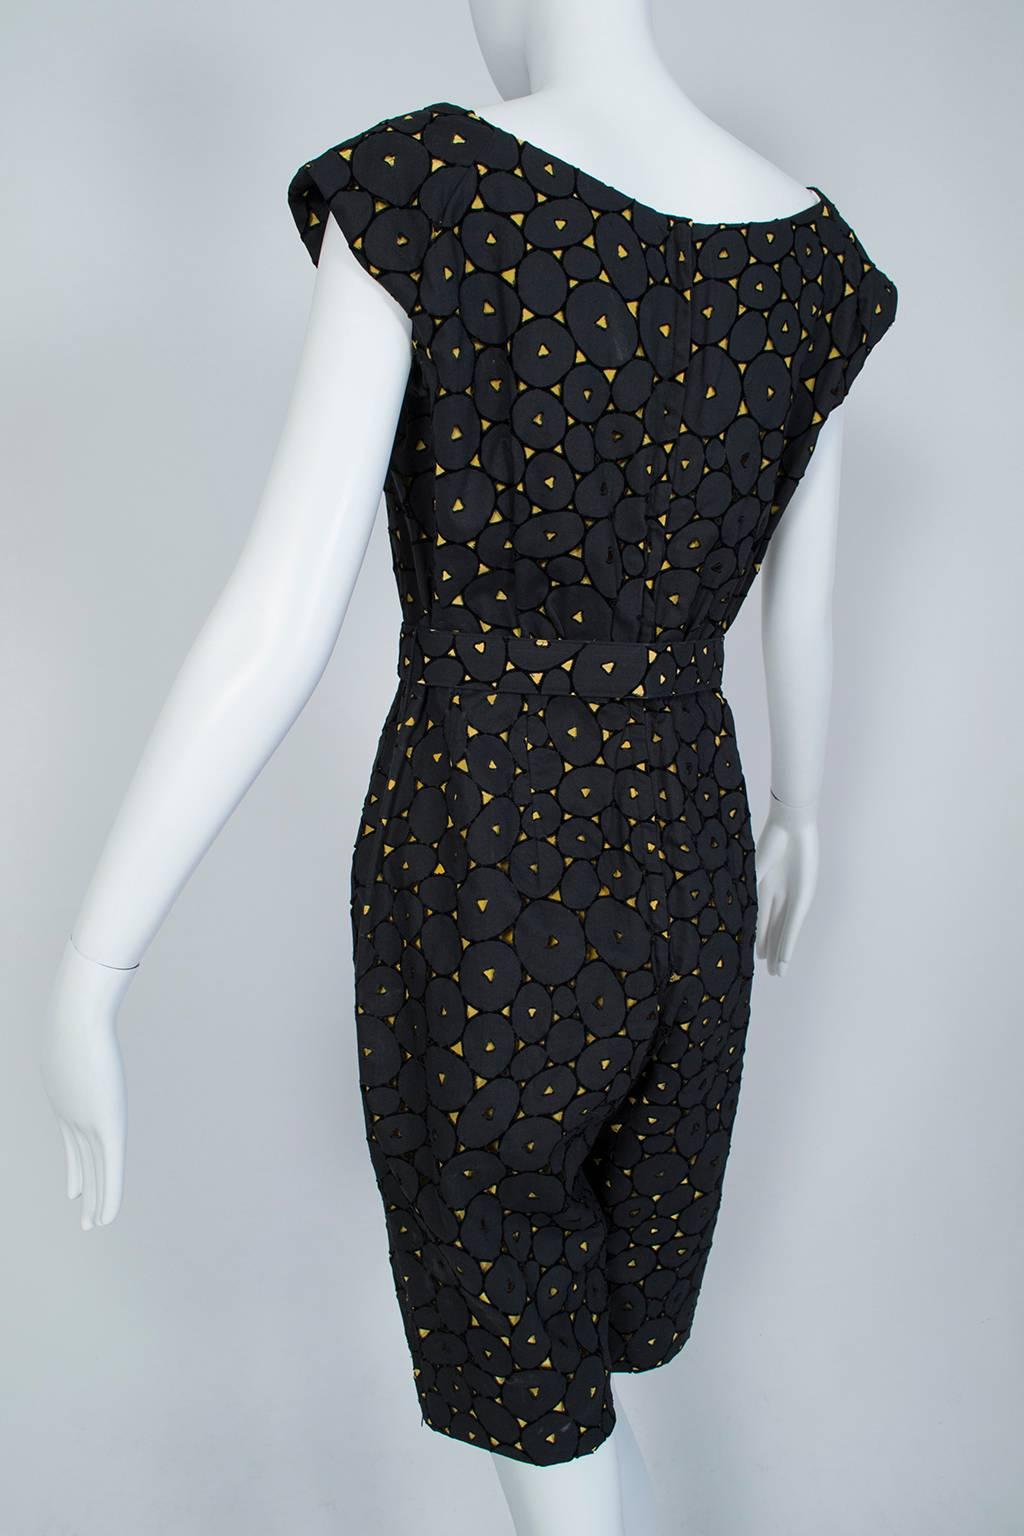 Black and Gold Eyelet Shorts Romper with Sheer Hostess Overskirt - Medium, 1950s 3